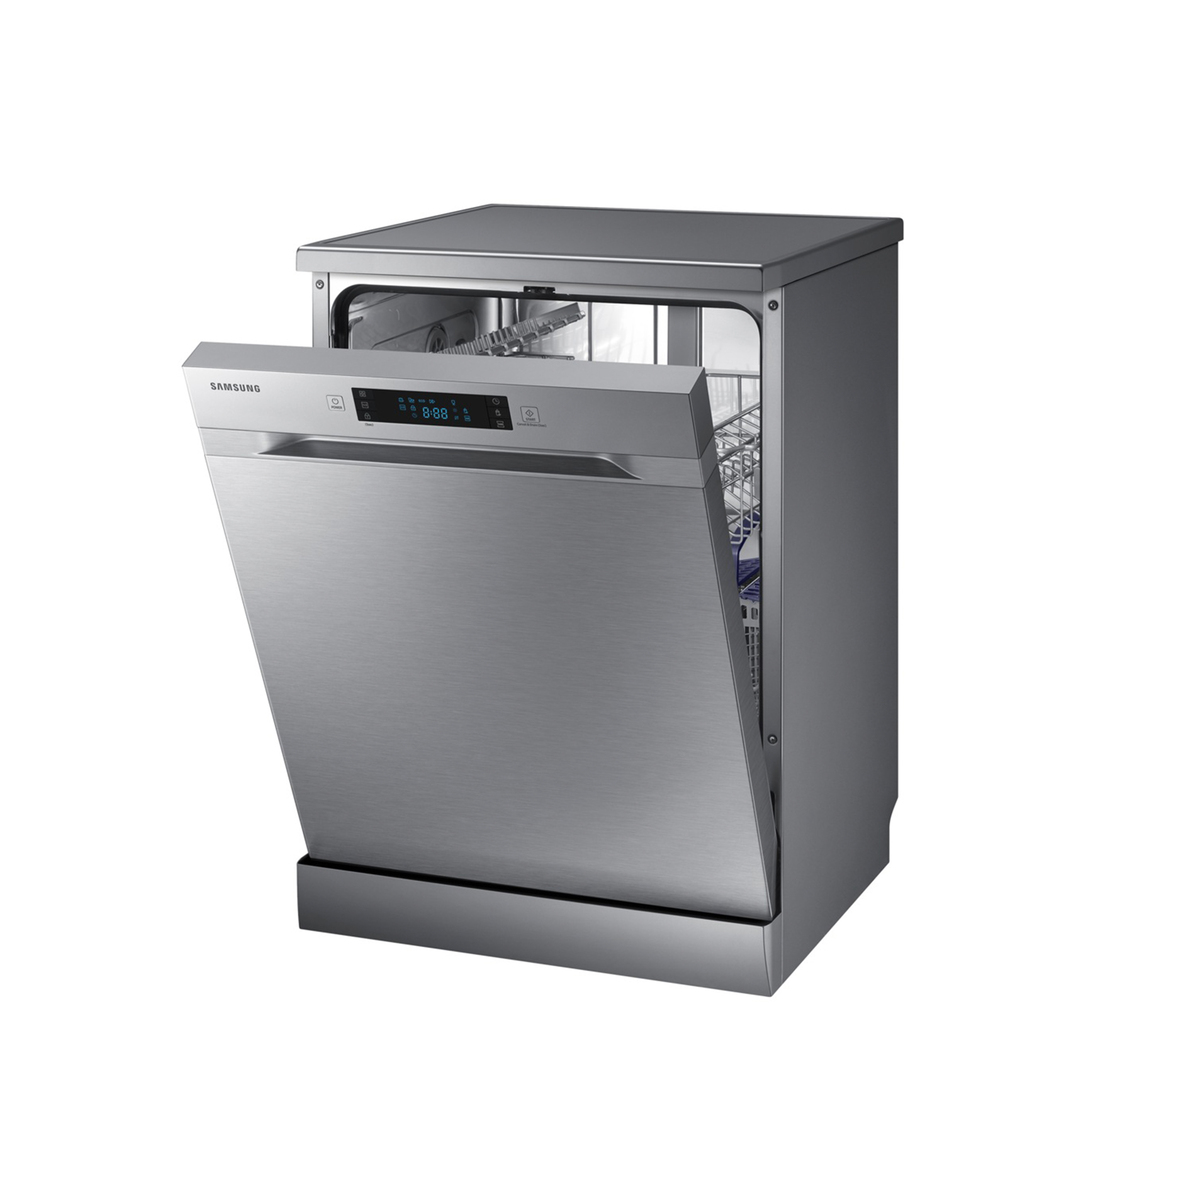 Samsung Dishwasher DW60M5050FS/SG 5Programs